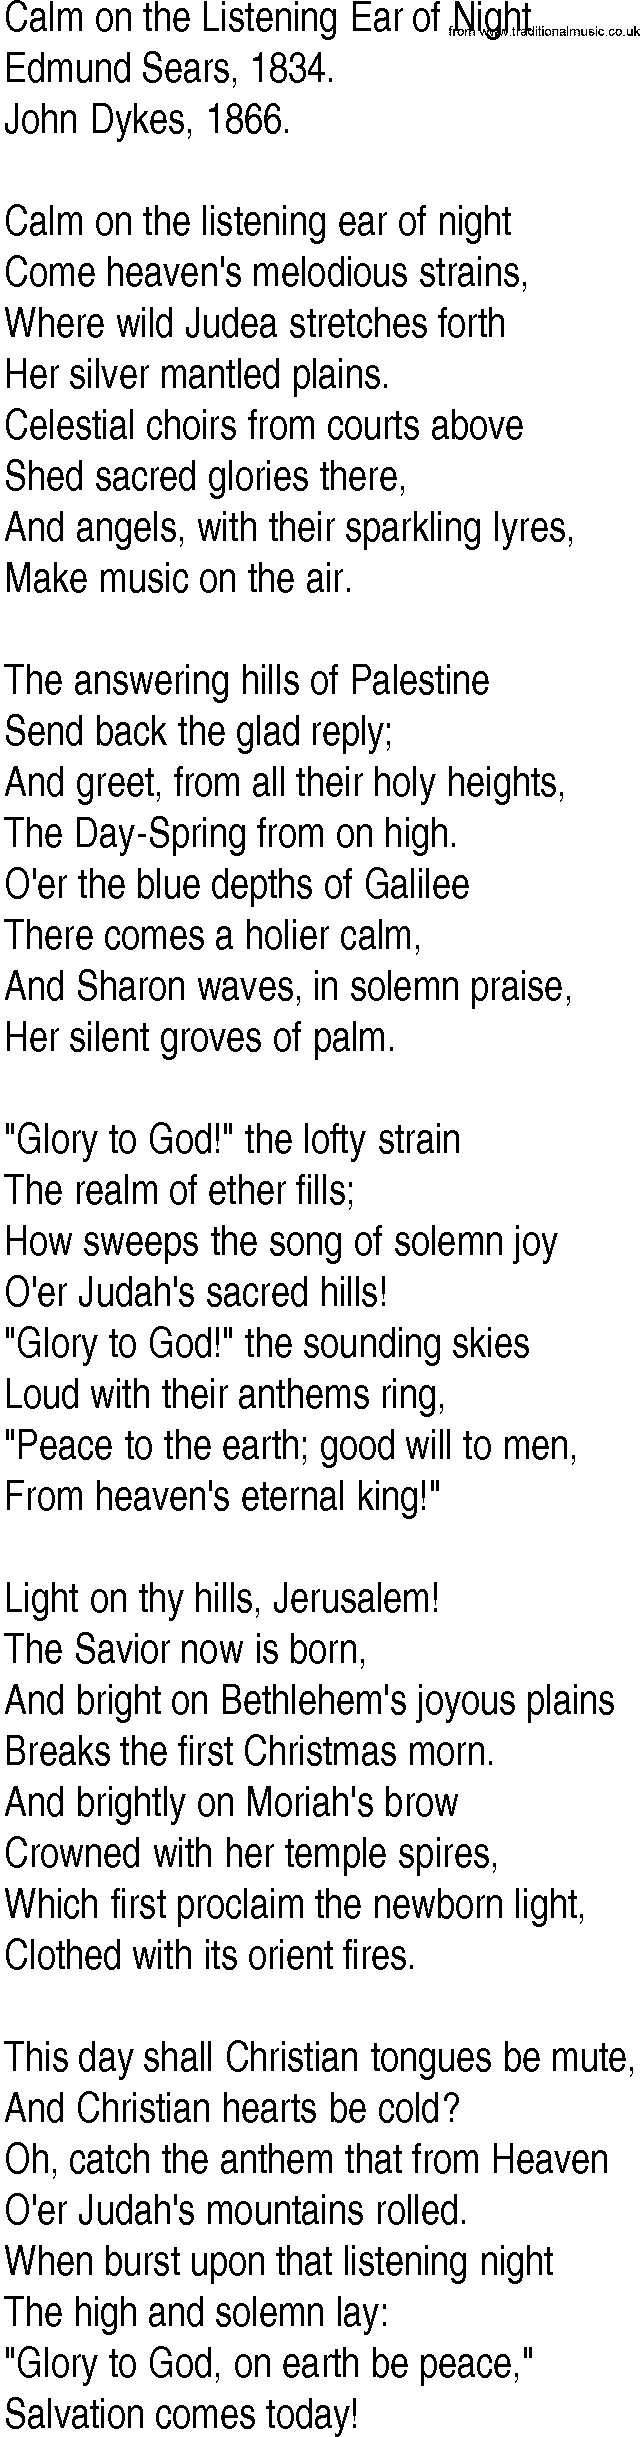 Hymn and Gospel Song: Calm on the Listening Ear of Night by Edmund Sears lyrics